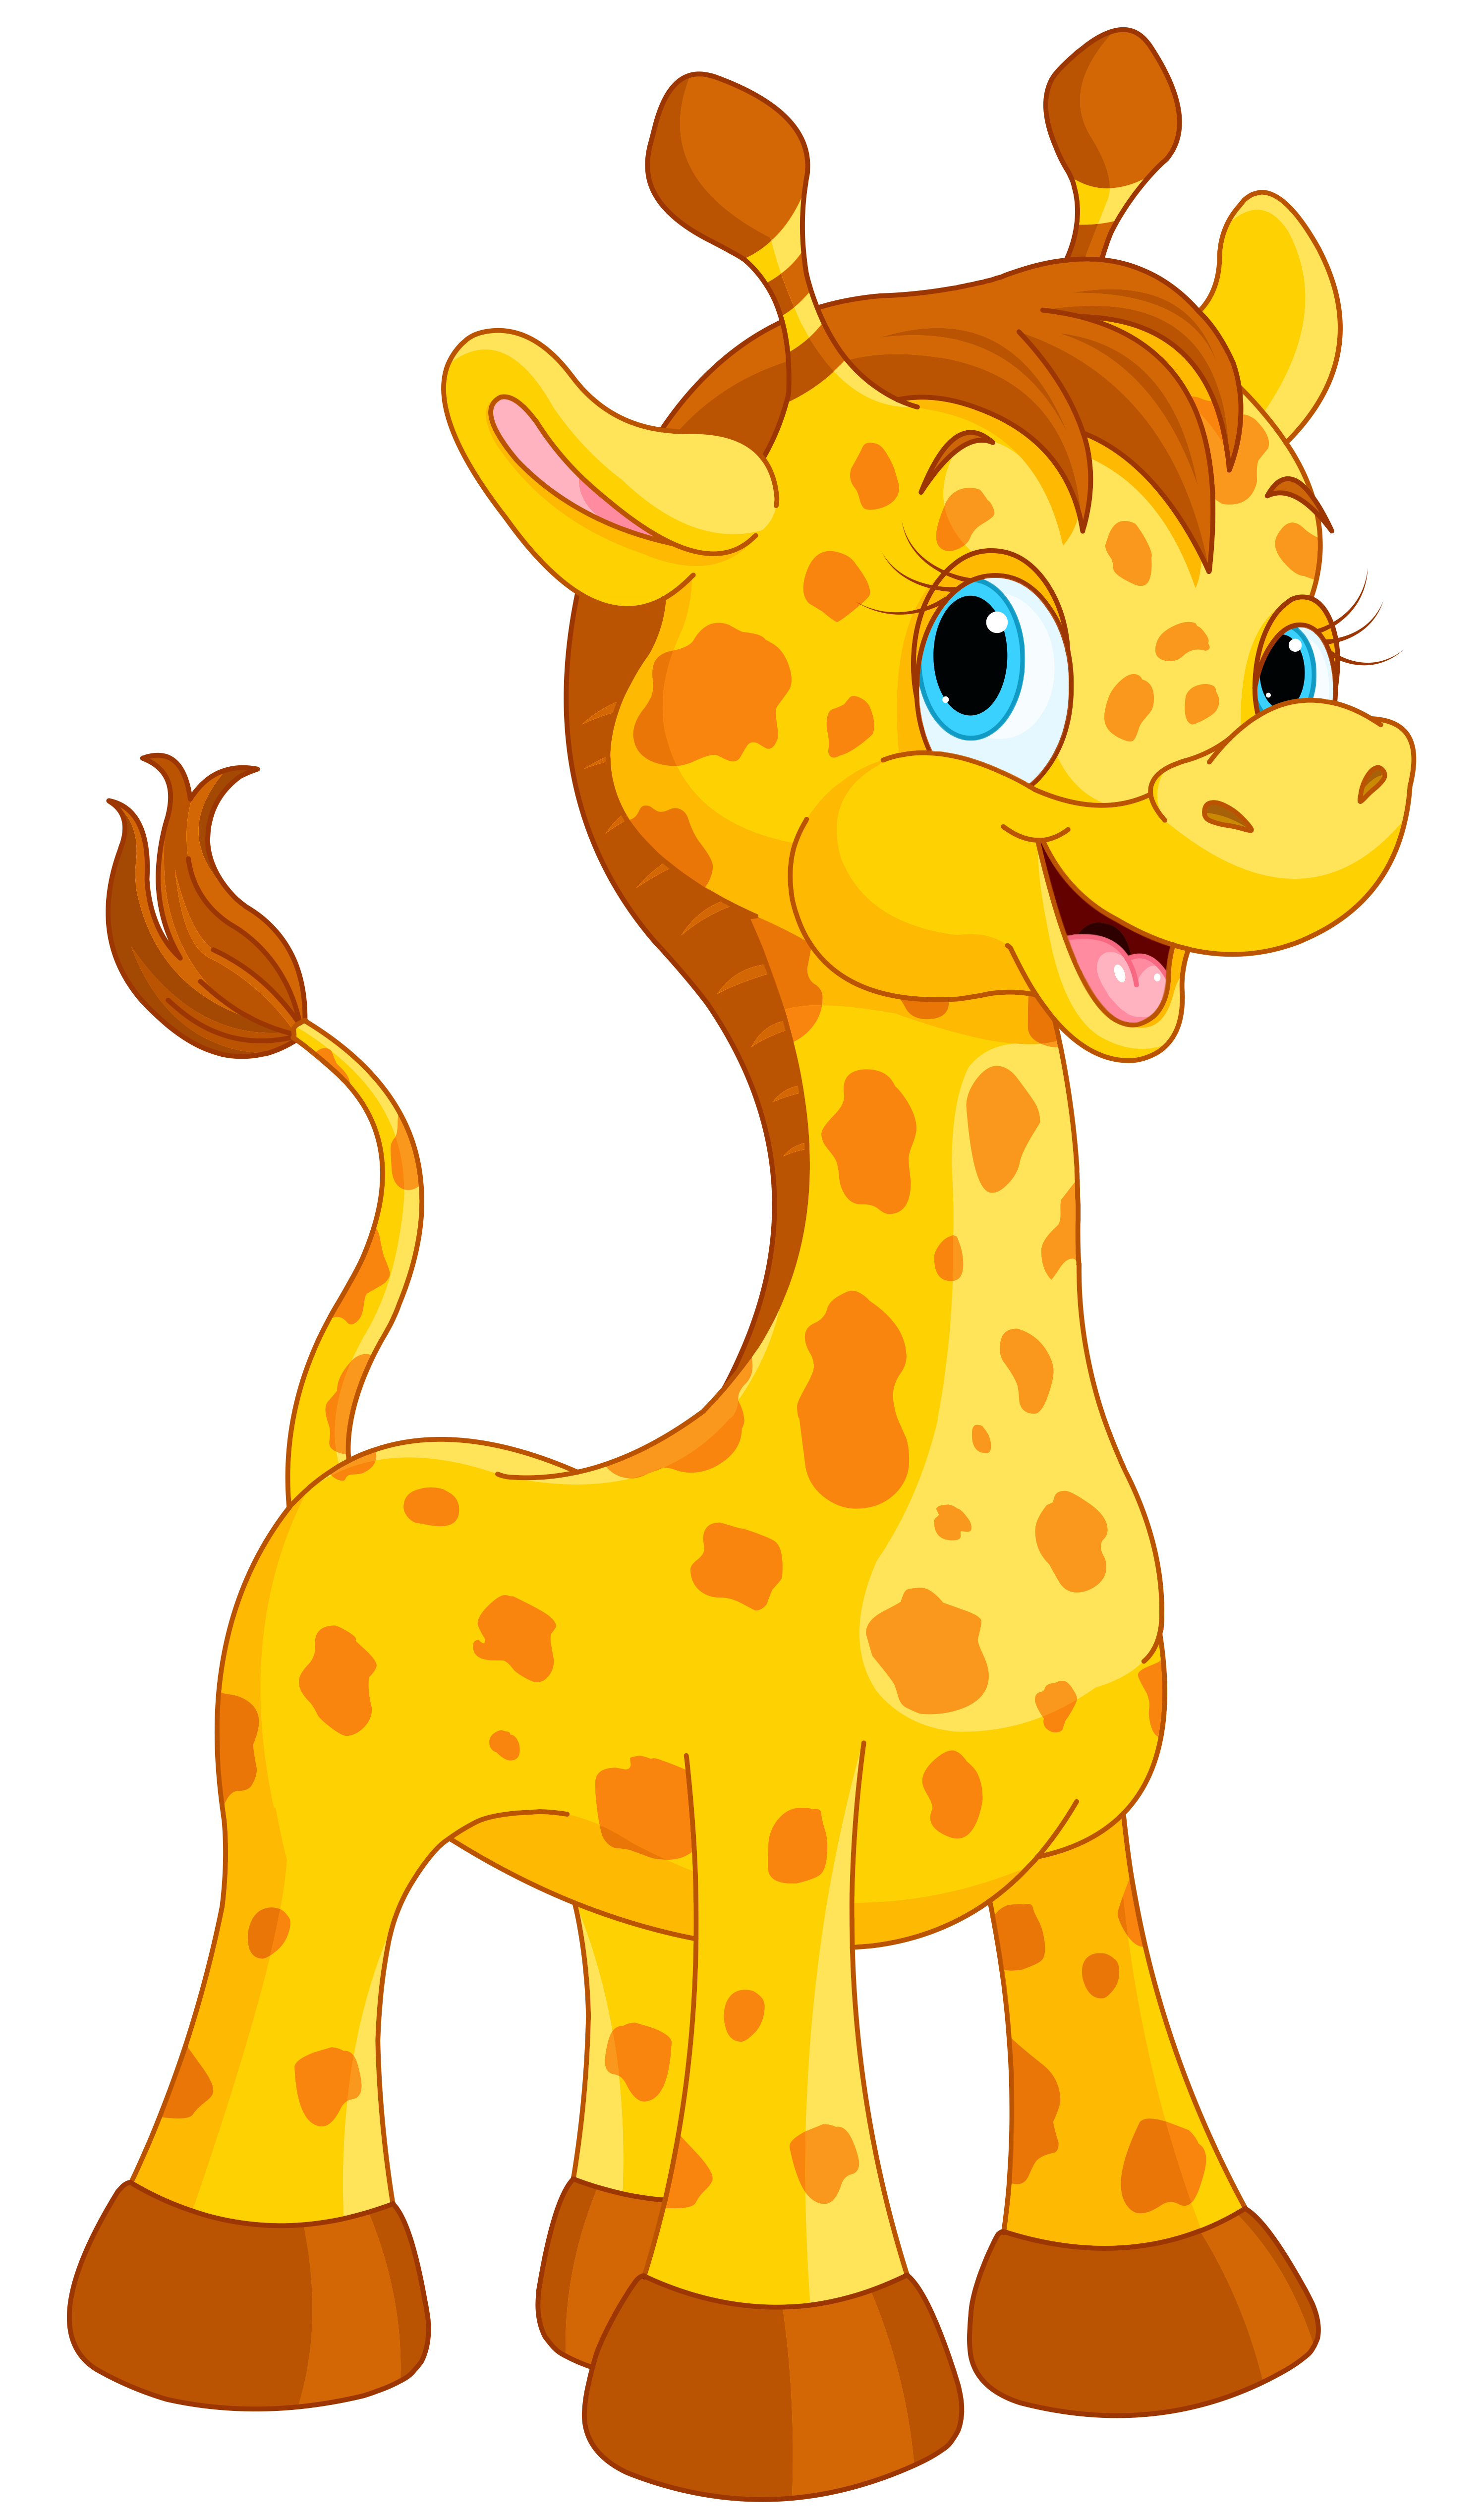 Cute cartoon png image. Gold clipart giraffe